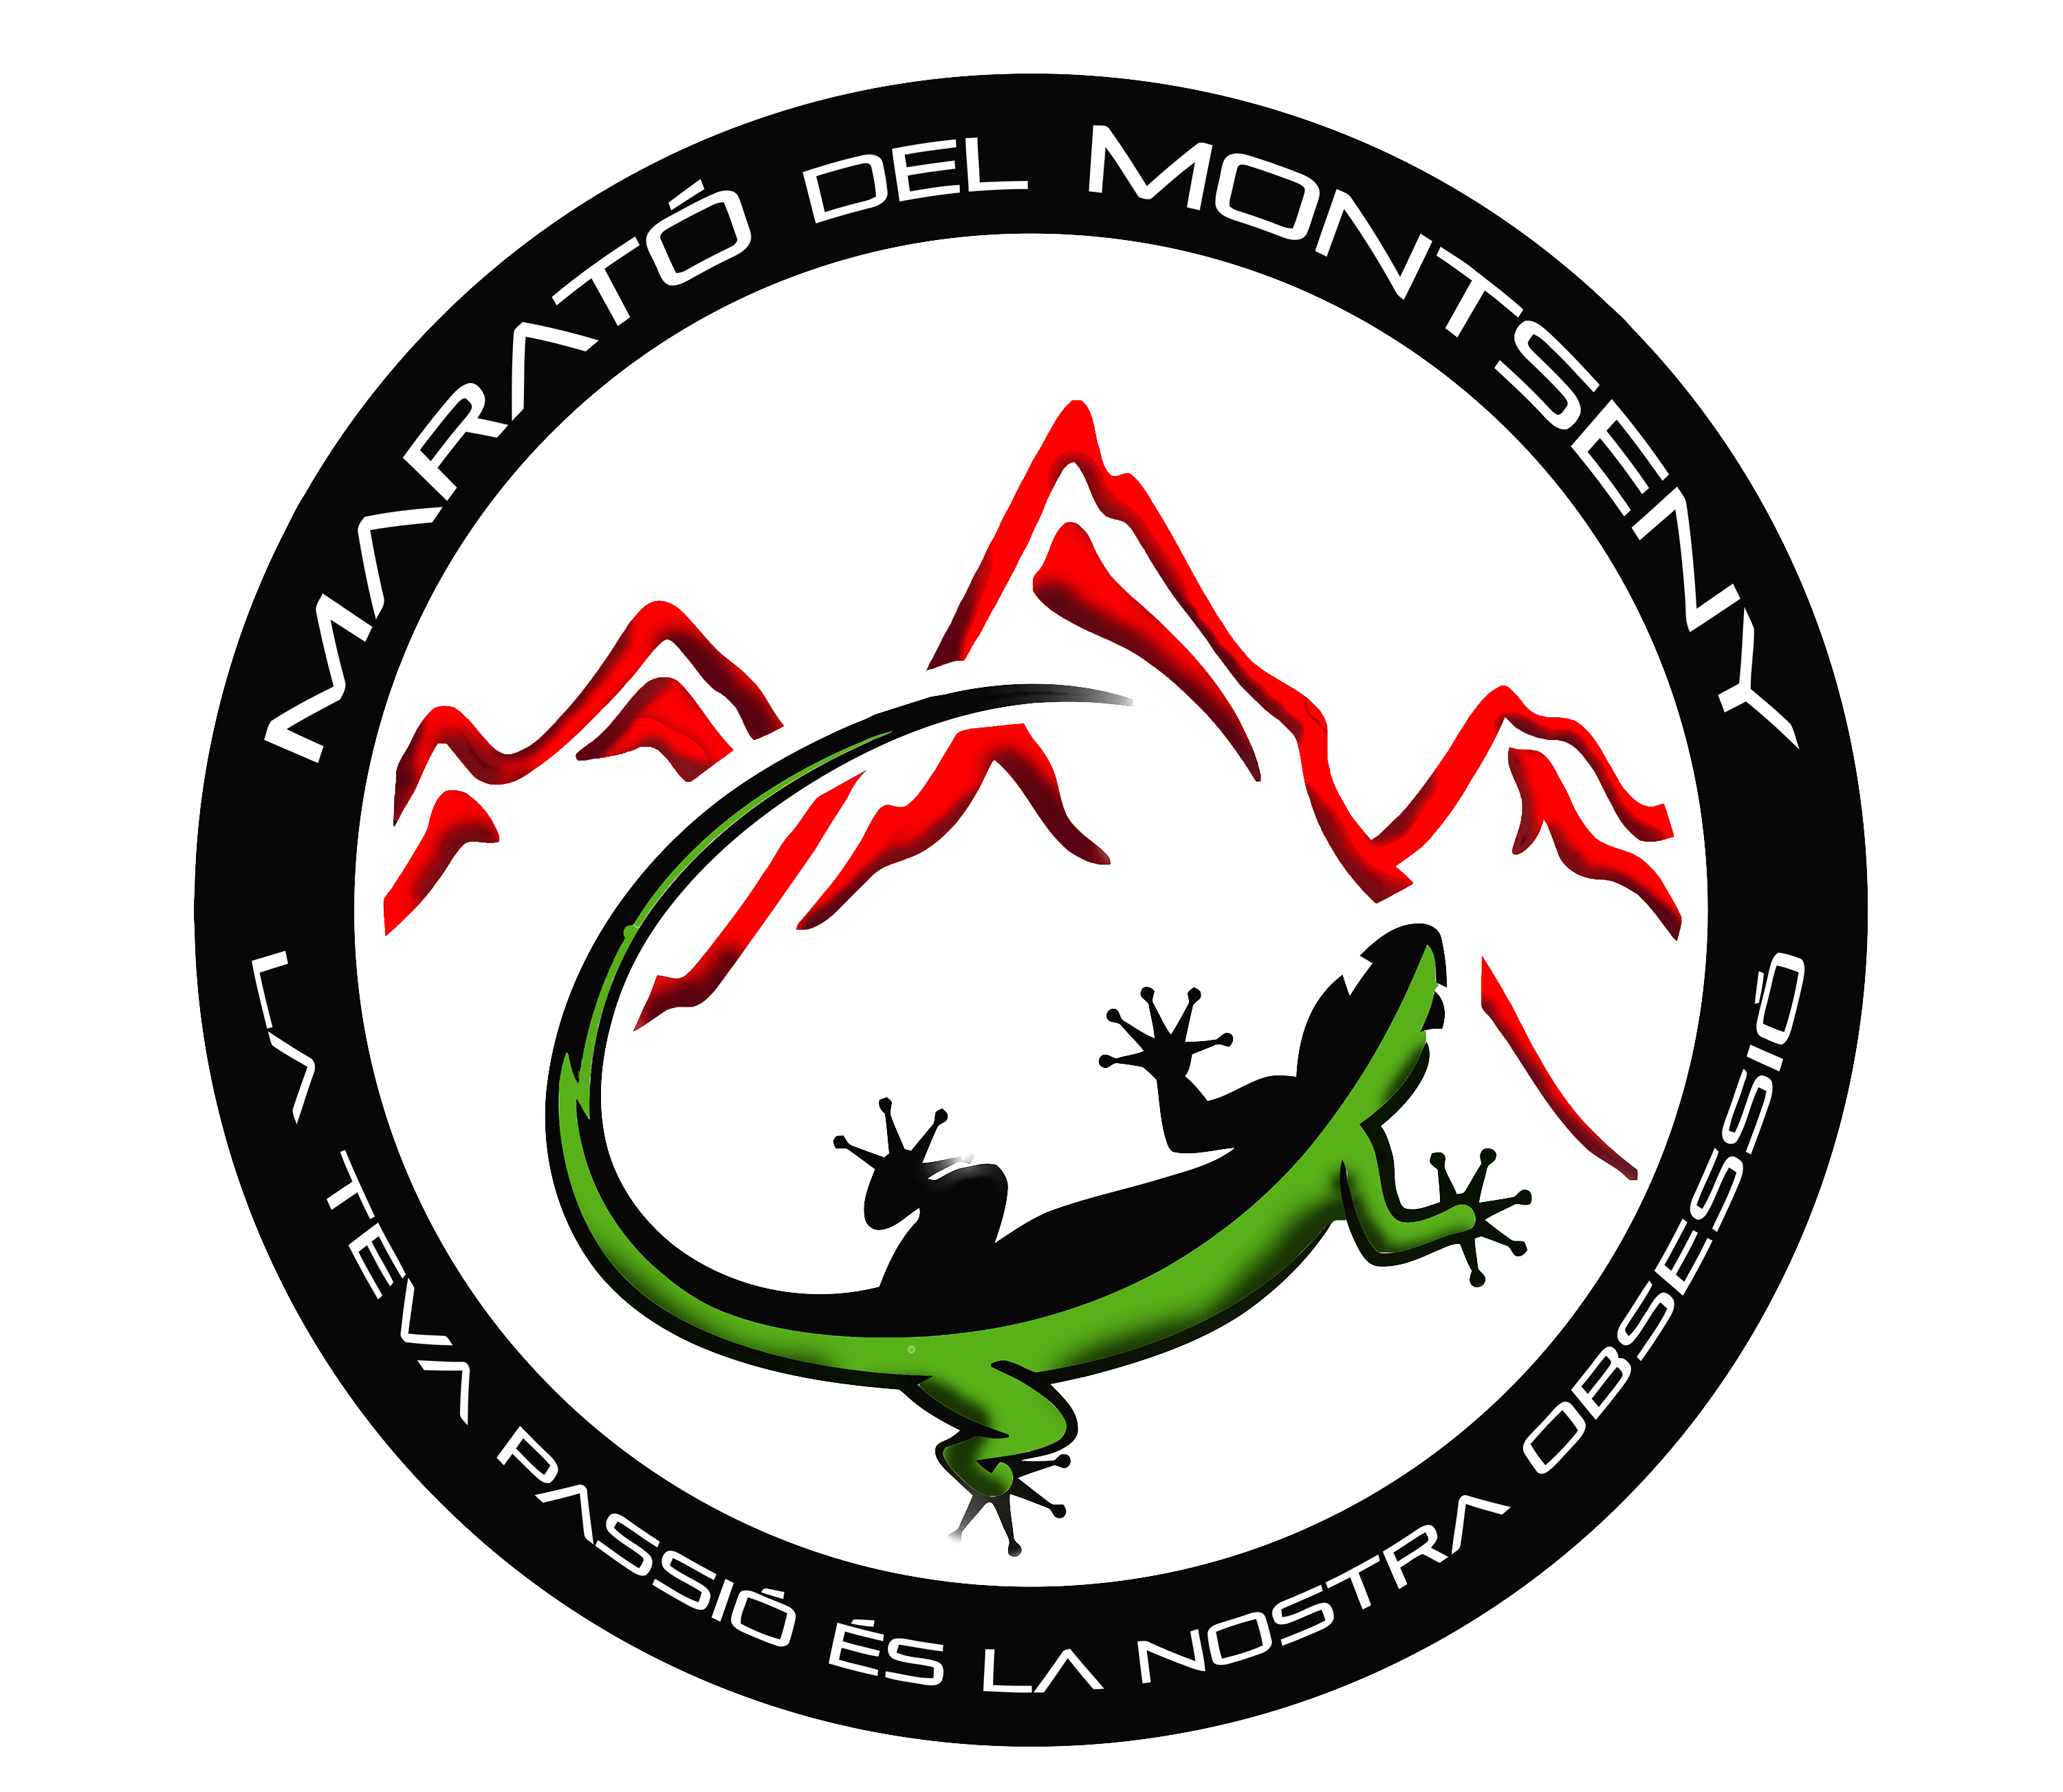 Marato del Montseny